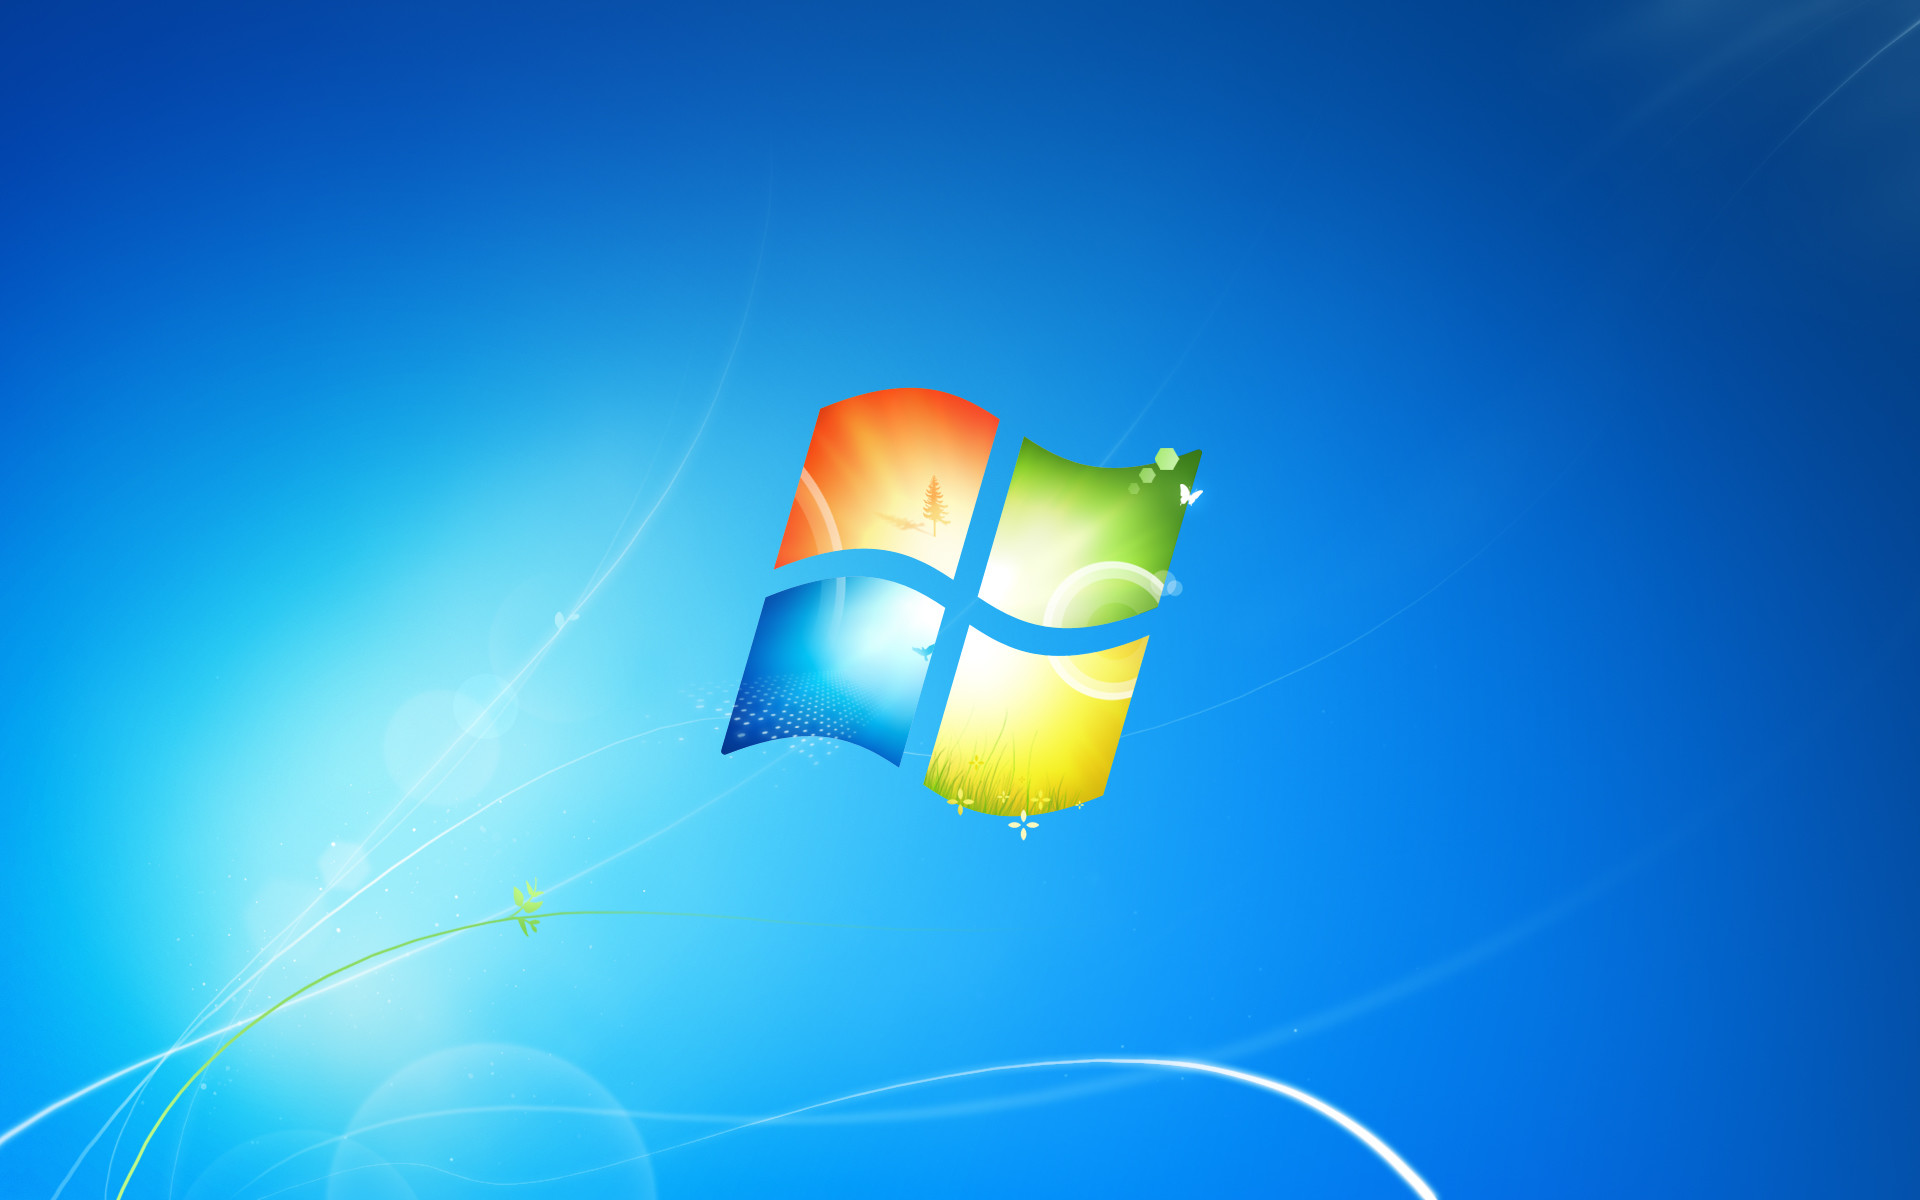 Classic Windows Desktop Wallpaper Image